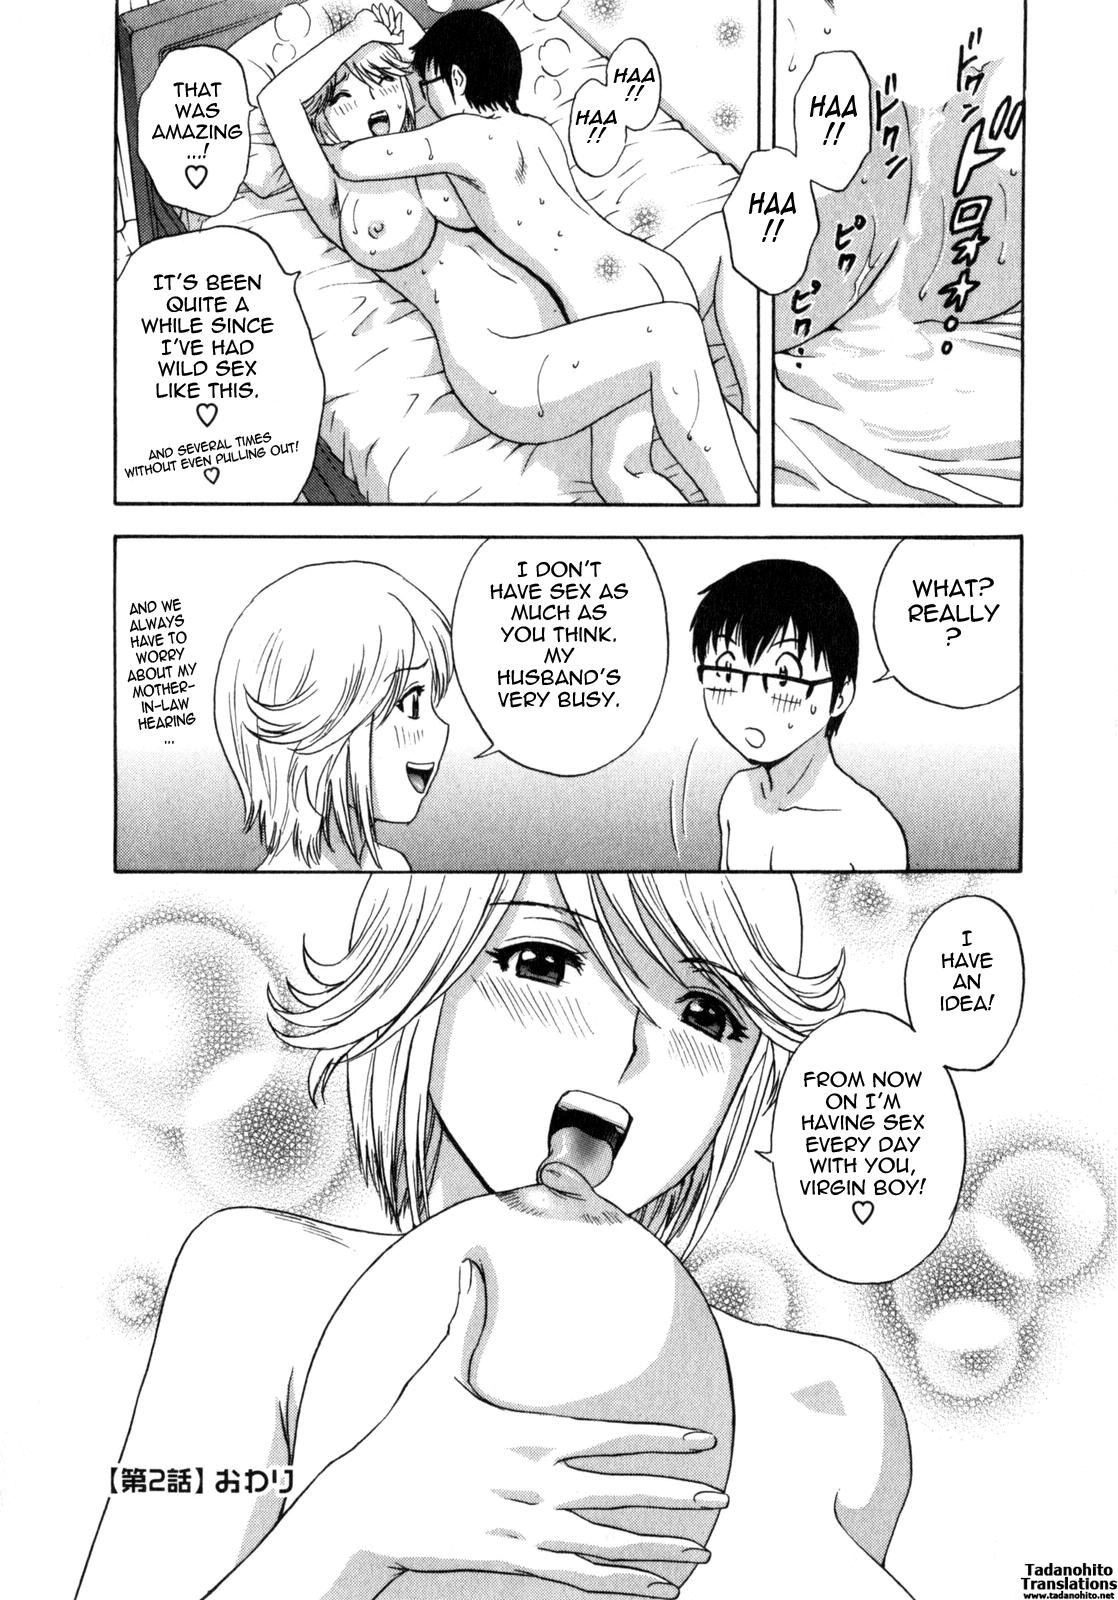 [Hidemaru] Life with Married Women Just Like a Manga 1 - Ch. 1-5 [English] {Tadanohito} 43